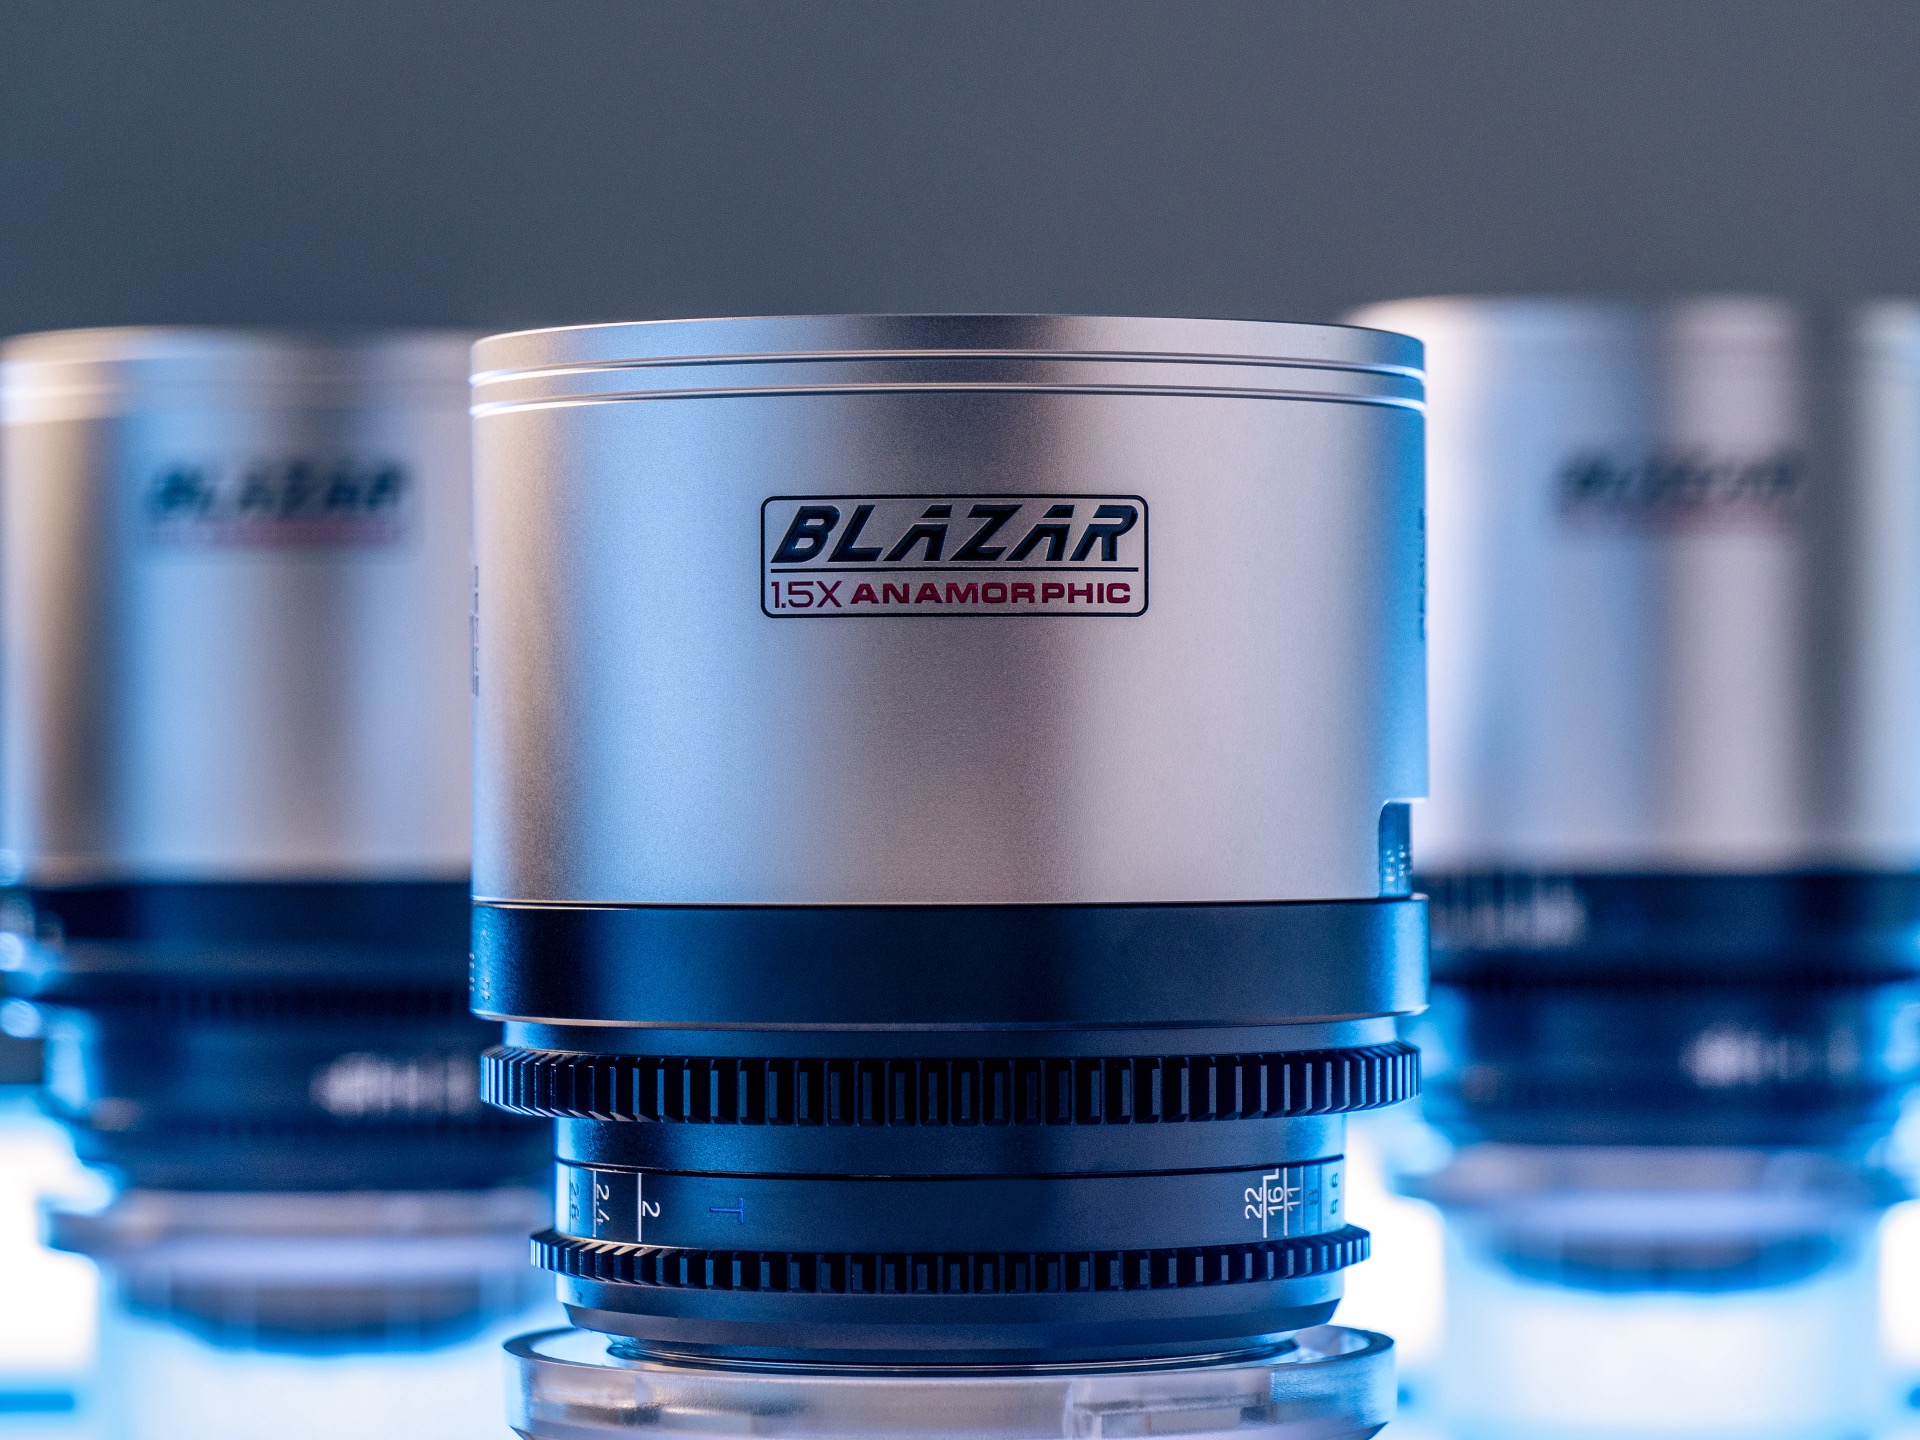 Review: Blazar Remus 1.5x anamorphic lenses 69